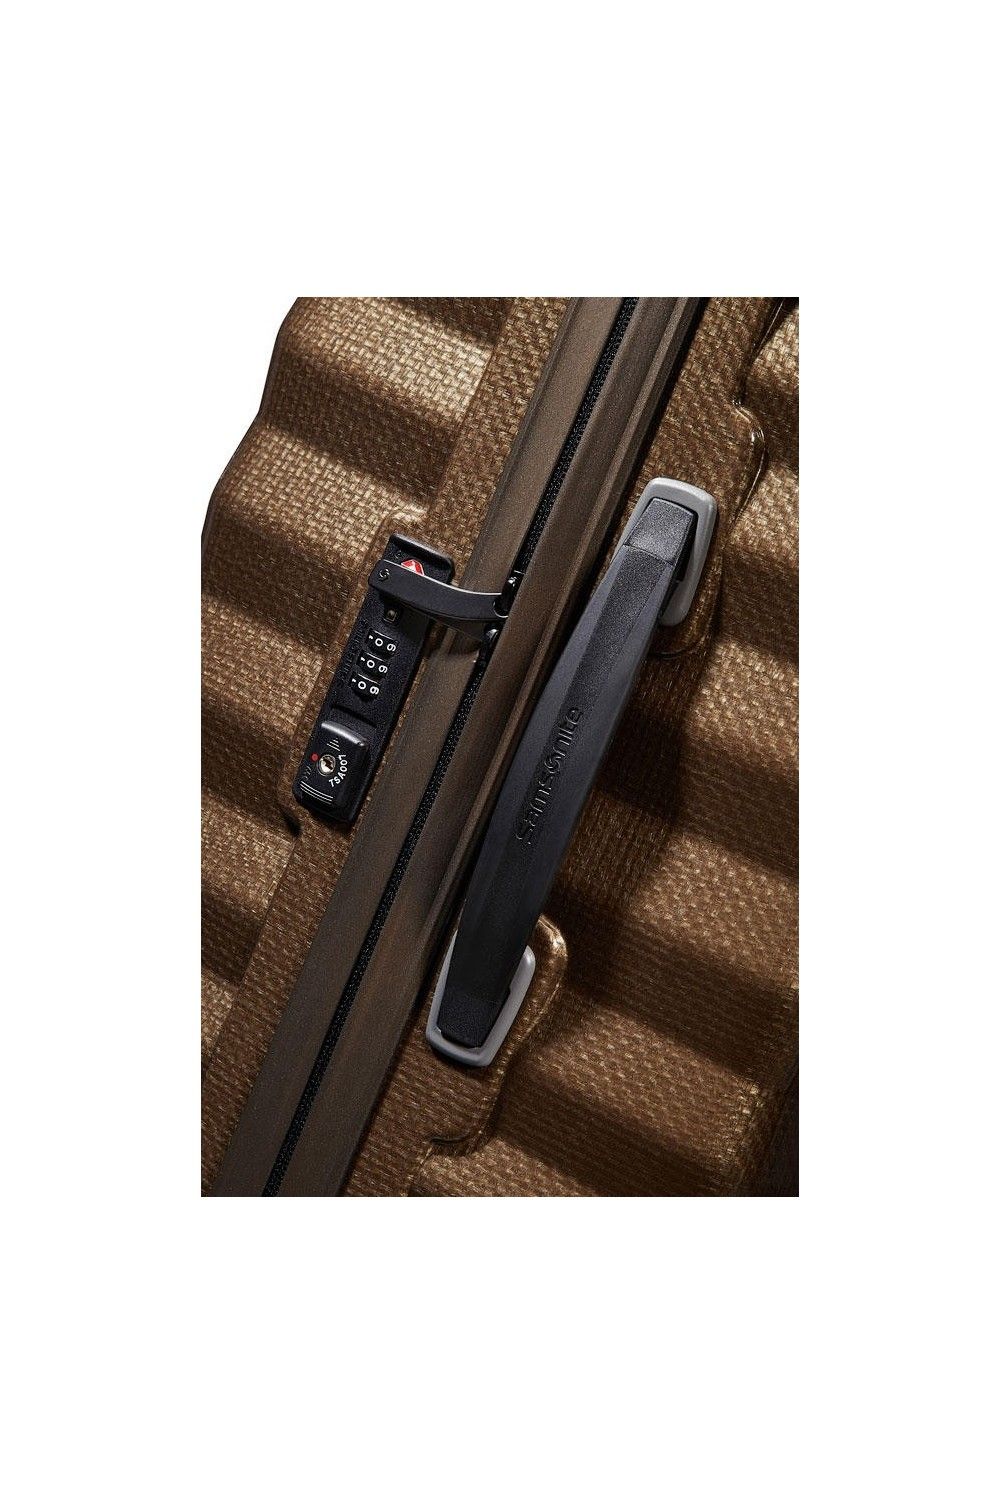 Samsonite Suitcase Lite Shock 69cm 4 wheel Sand